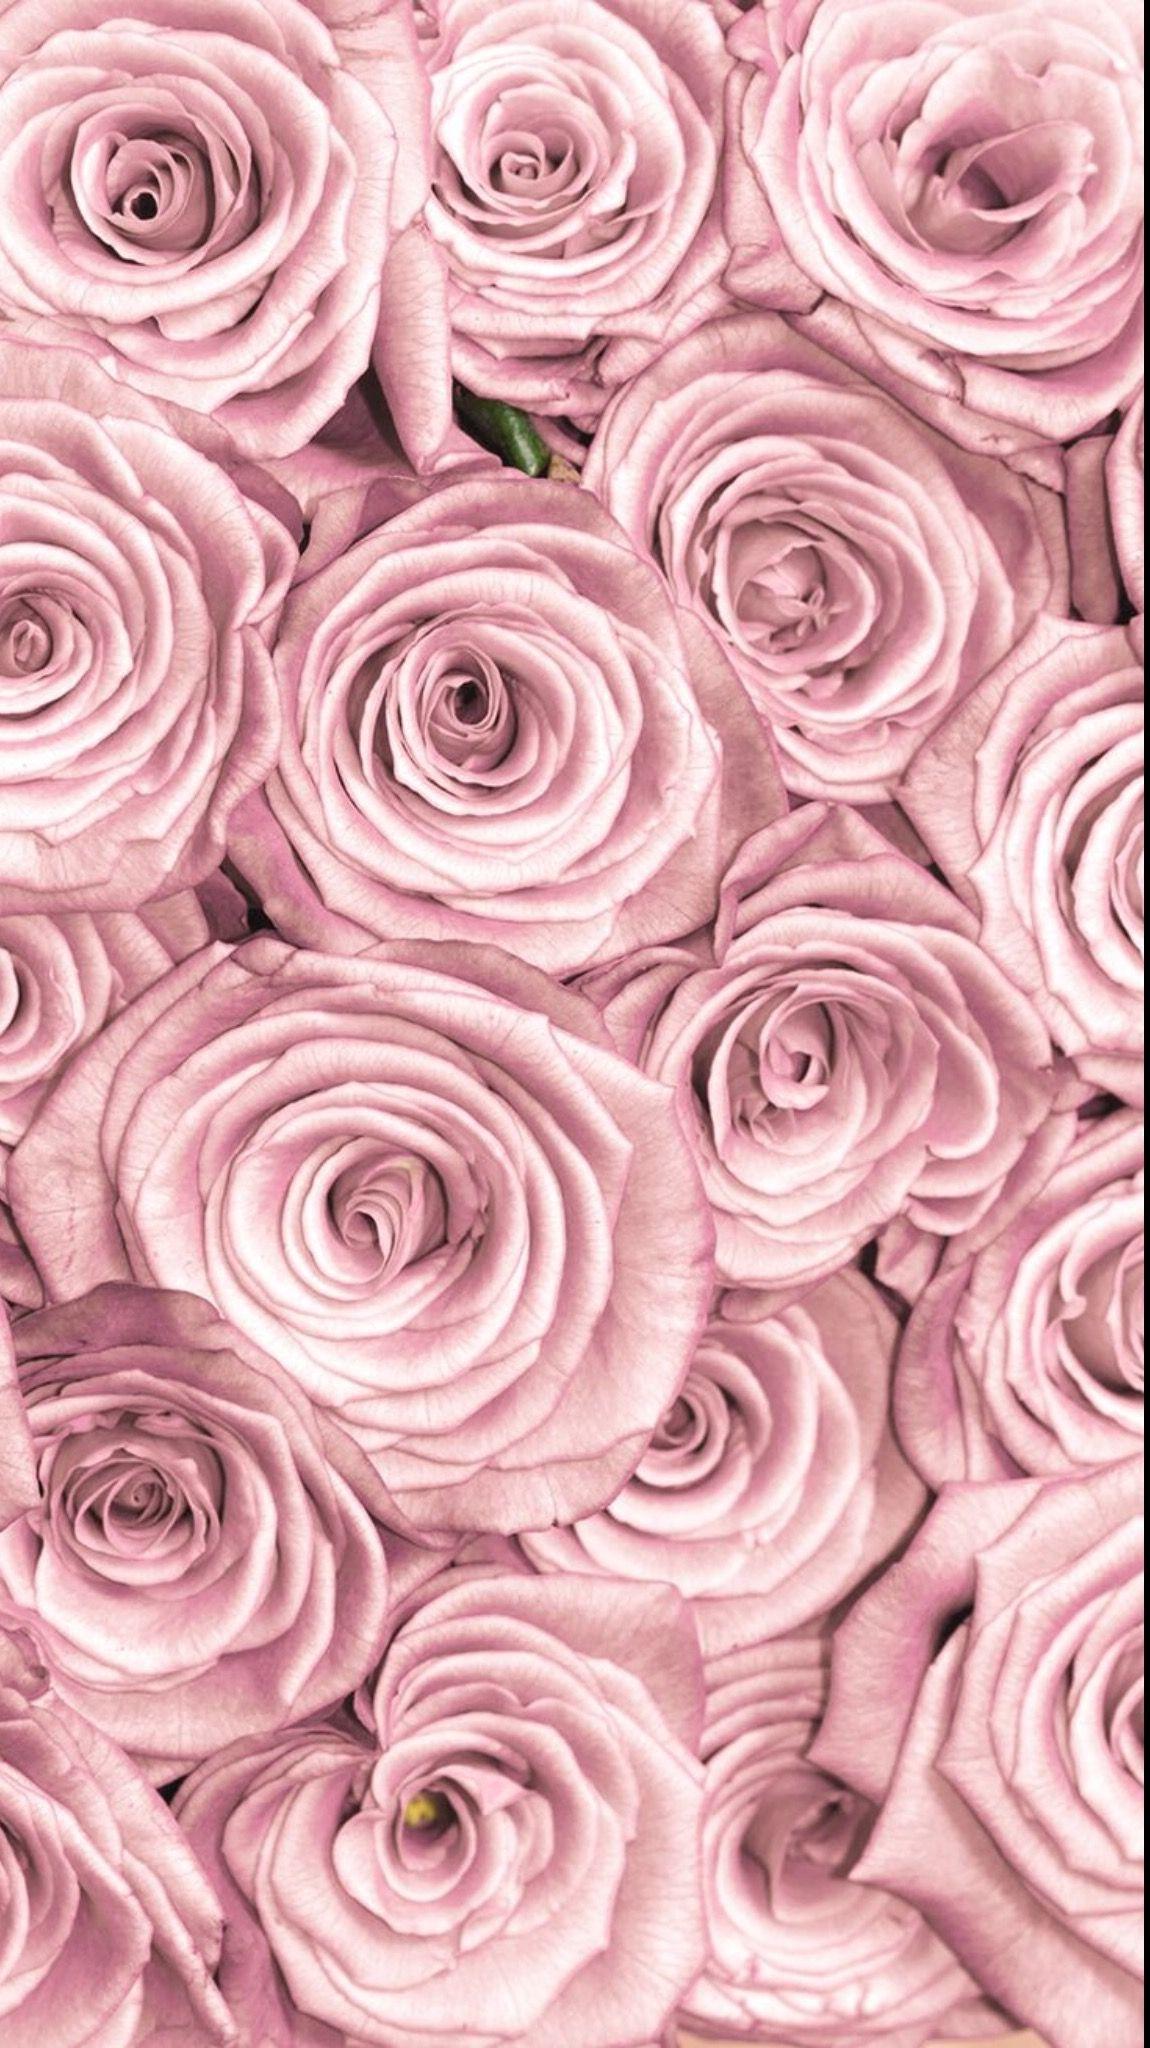 Rose Kawaii Wallpapers - Top Free Rose